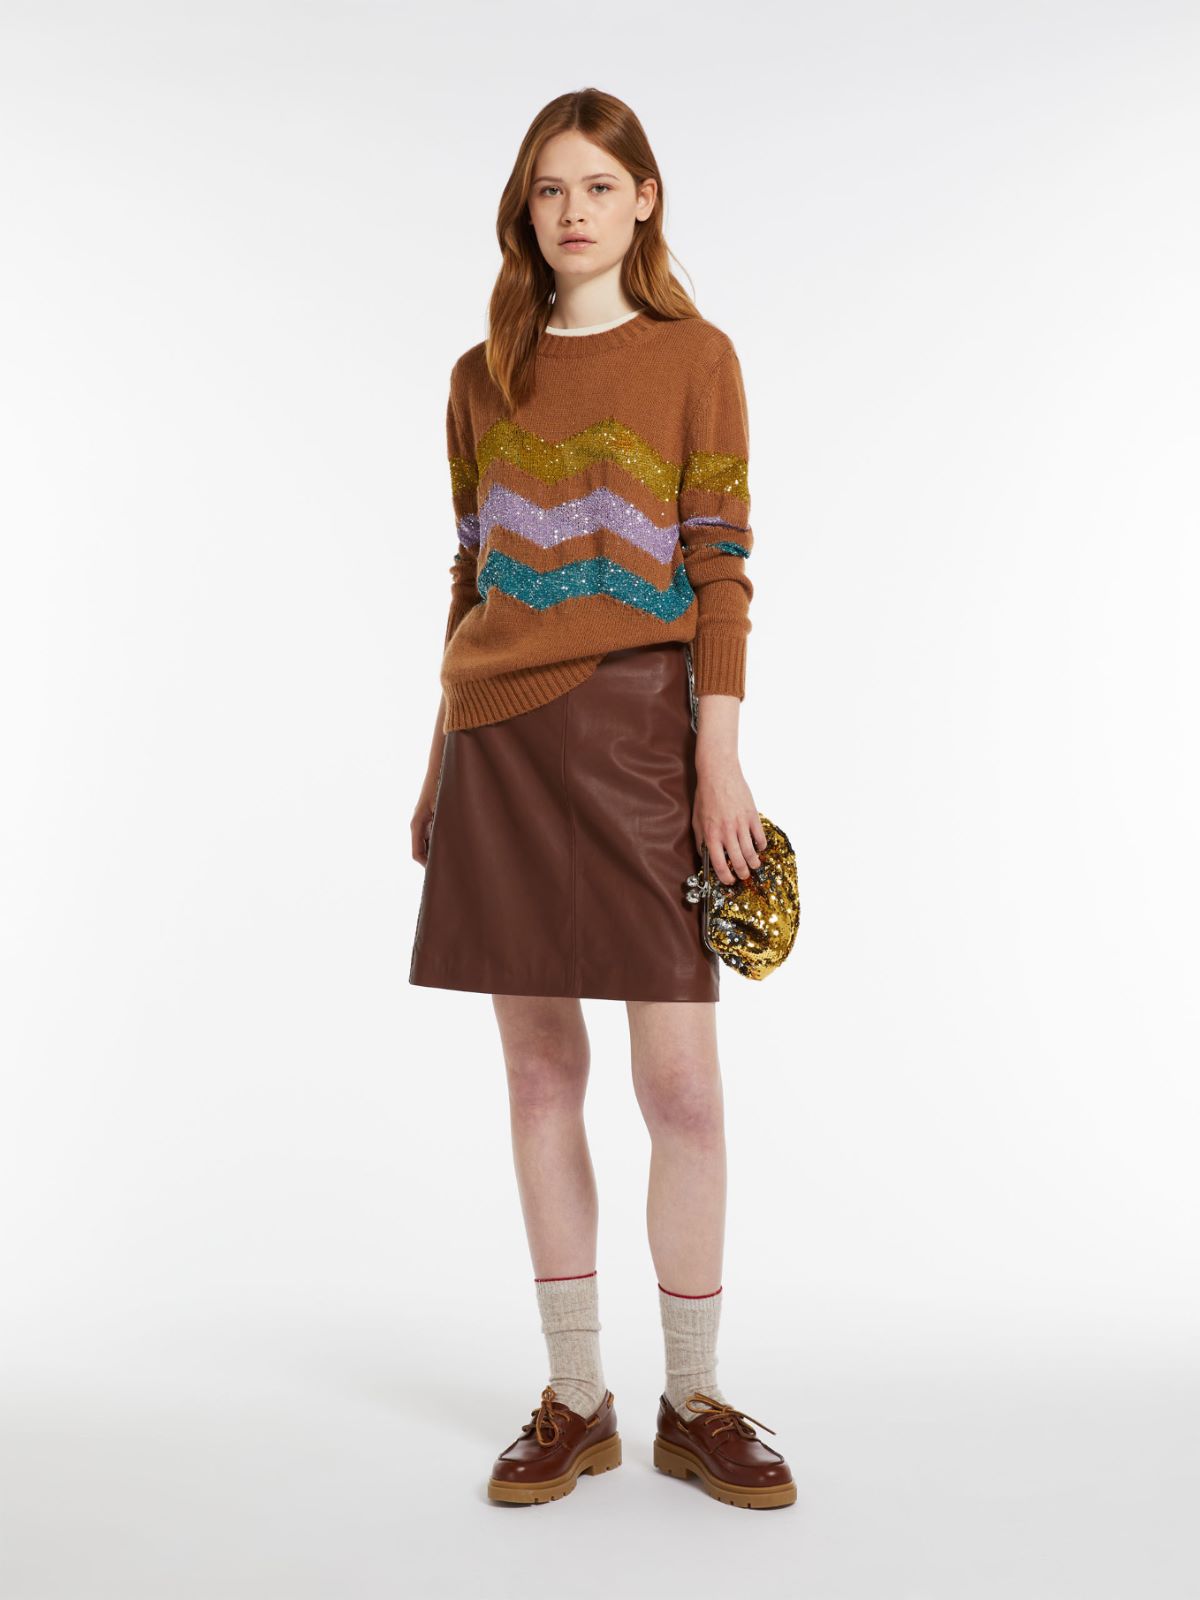 Sequin-embellished mohair yarn sweater - EARTH - Weekend Max Mara